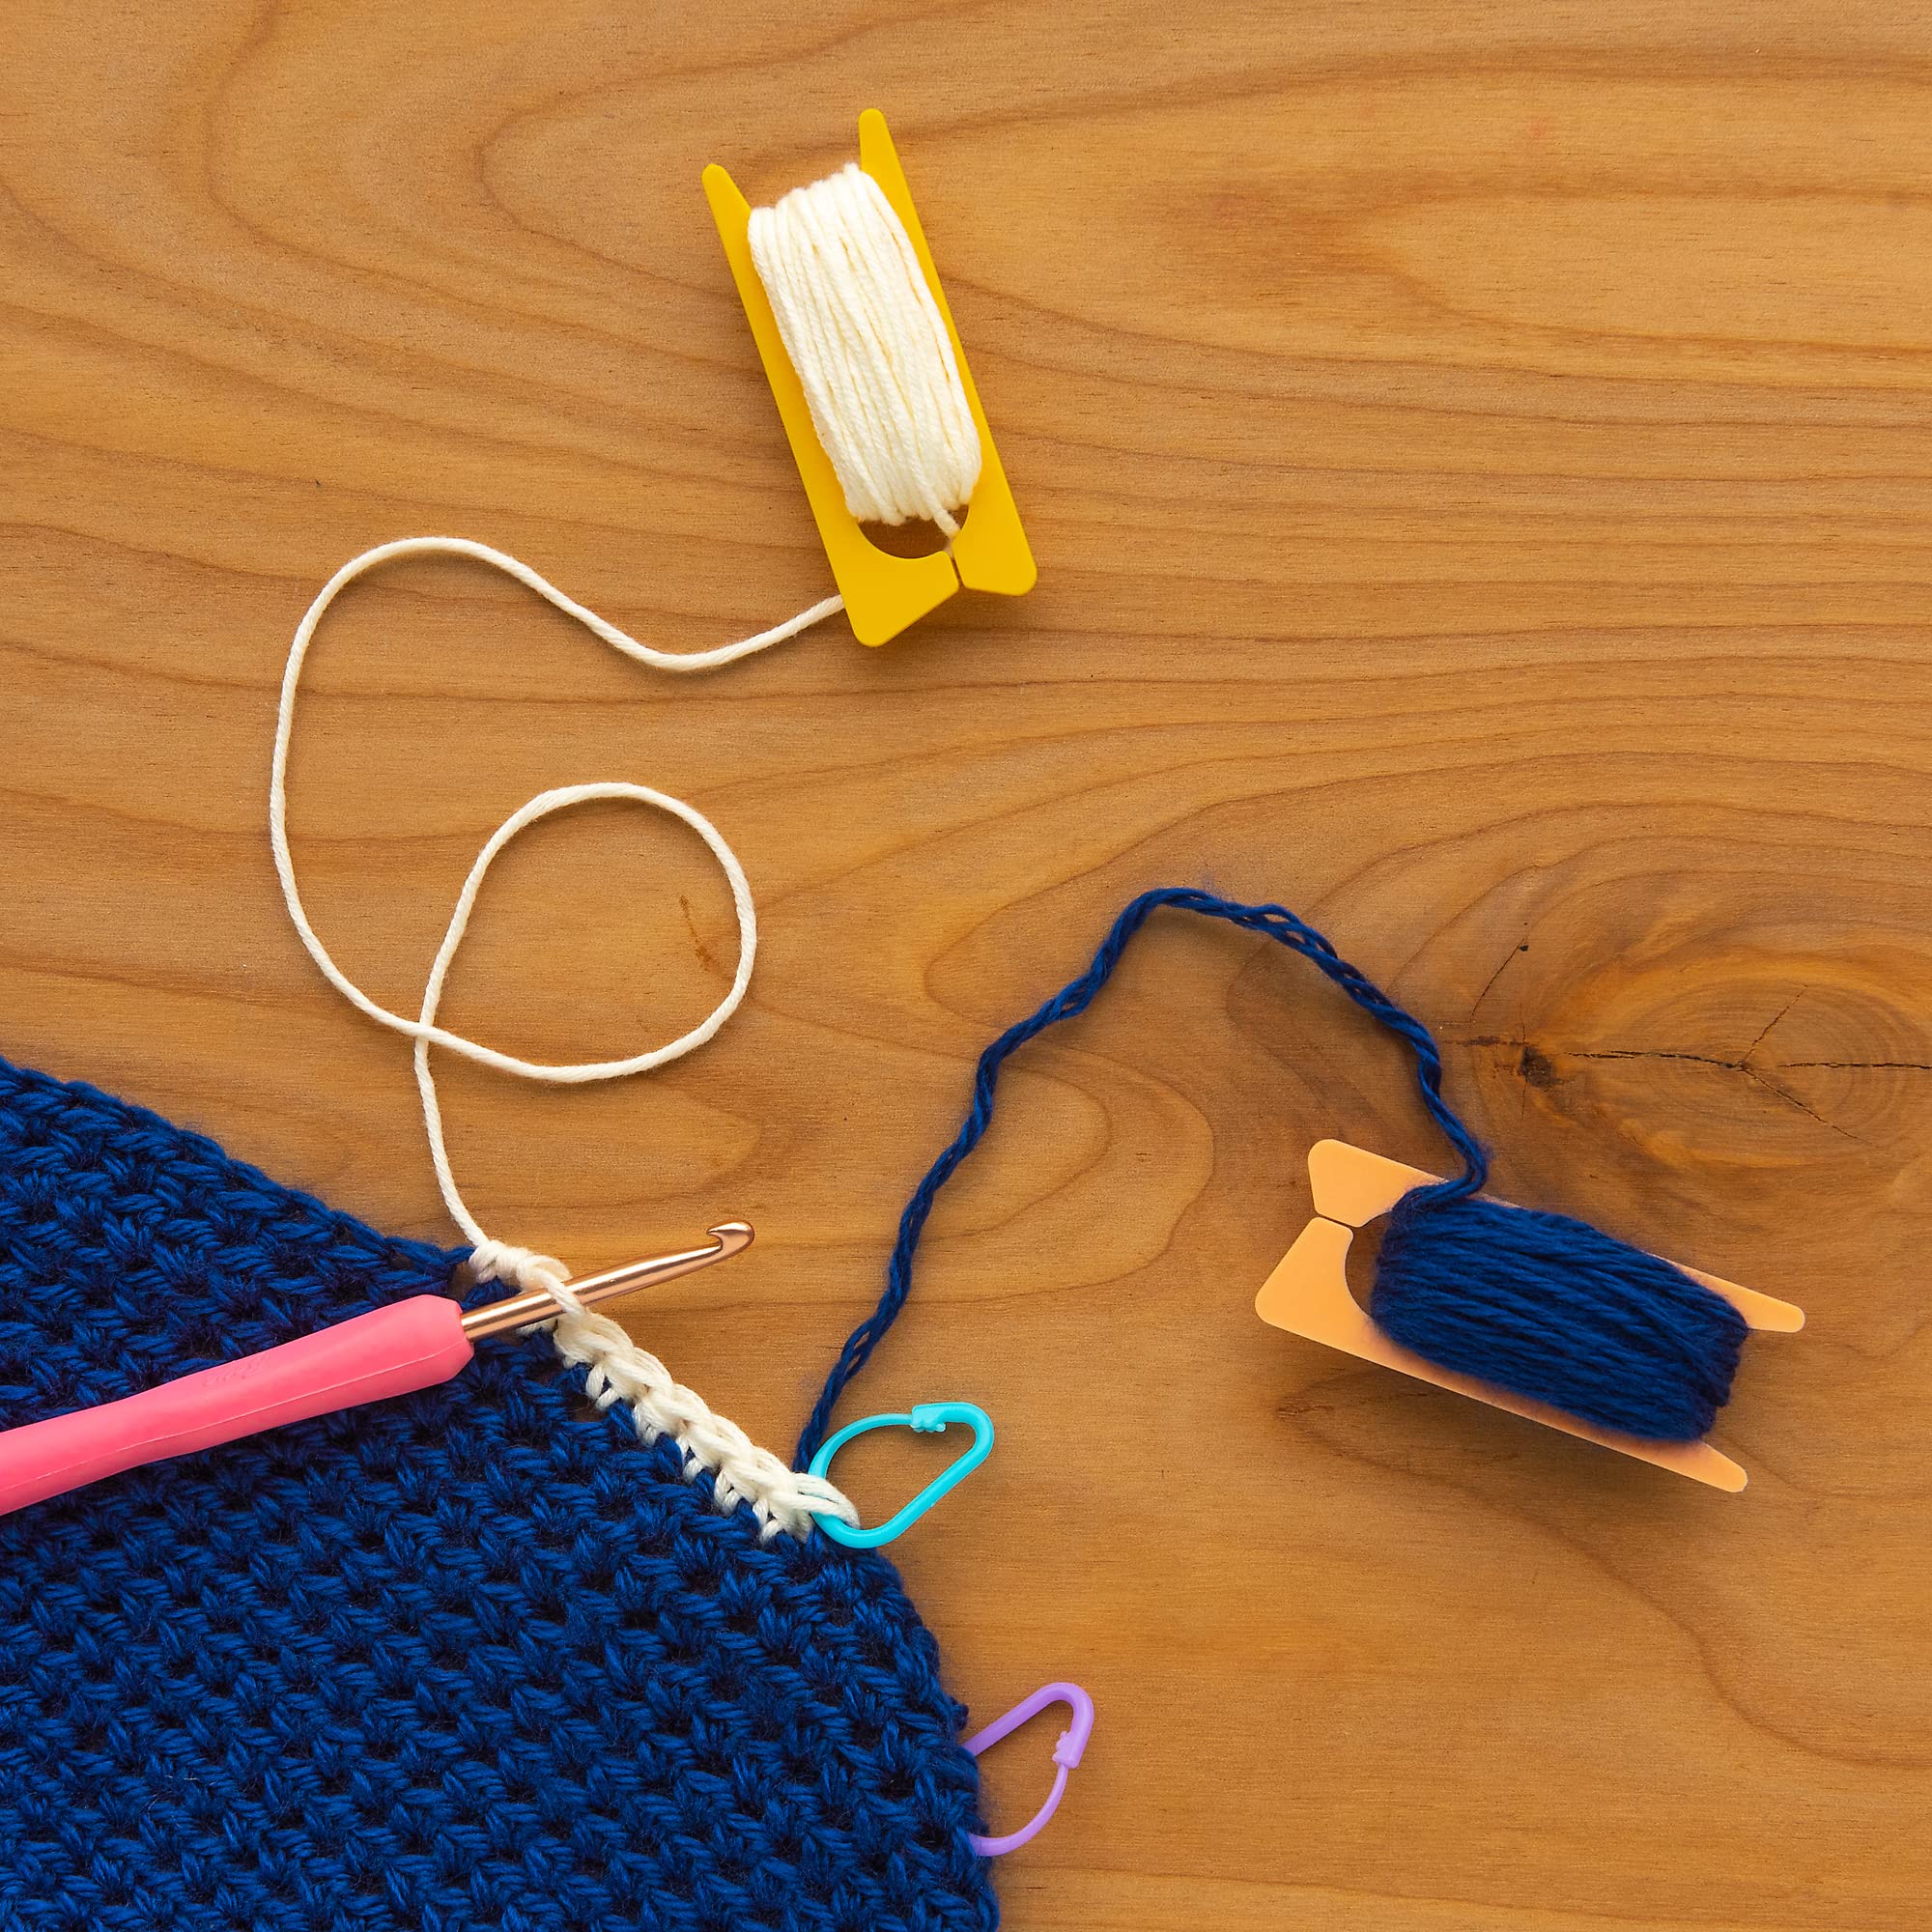 Boye Light and Medium Weight Yarn Bobbins for Knitting and Crochet, 2.625